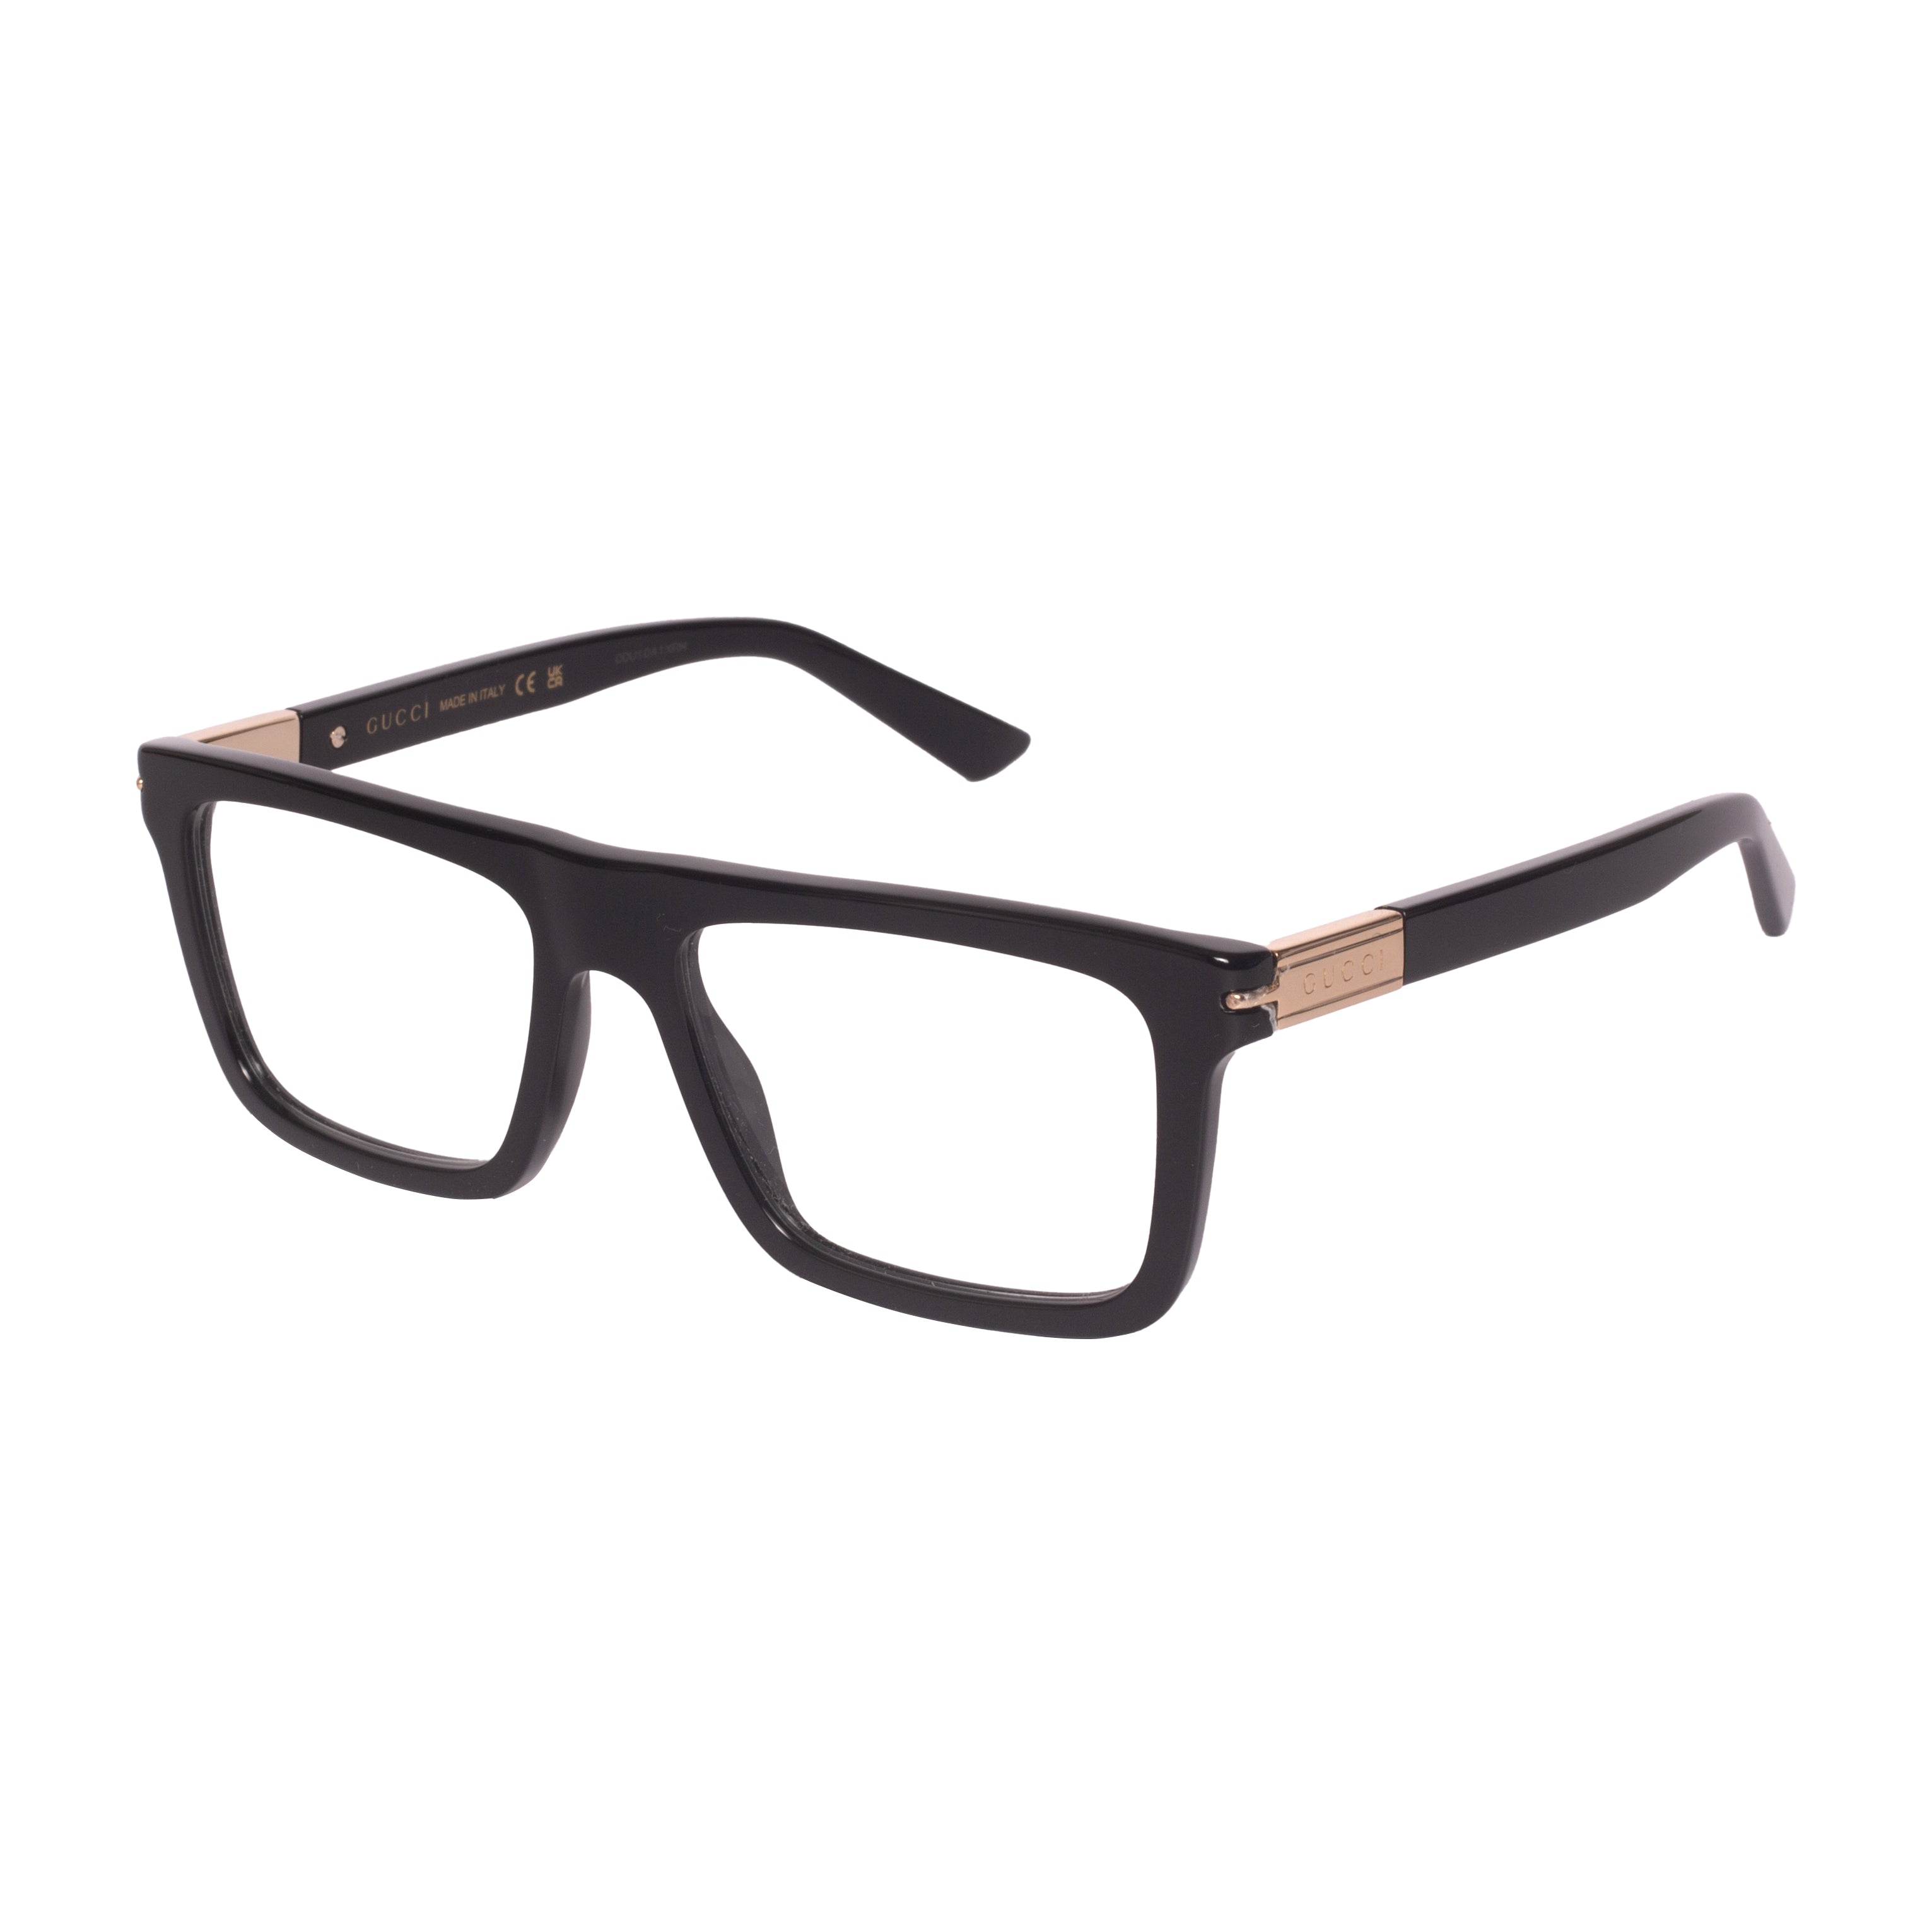 Gucci-GG1540-52-001 Eyeglasses - Premium Eyeglasses from Gucci - Just Rs. 18400! Shop now at Laxmi Opticians